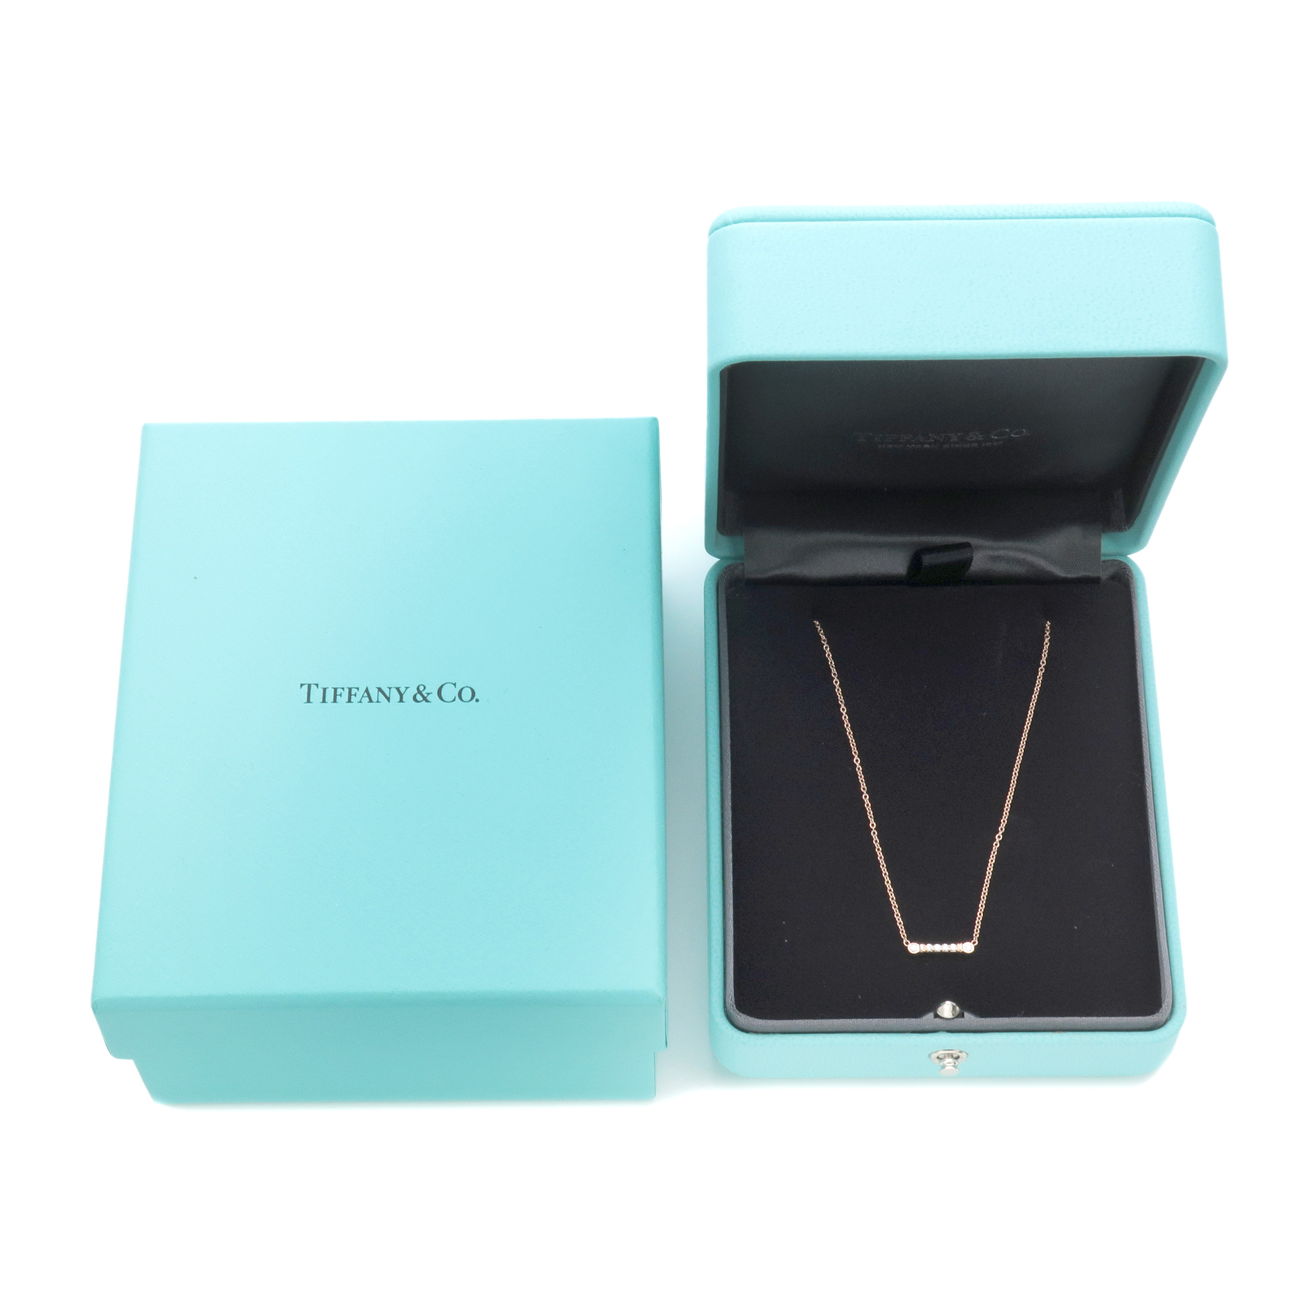 Tiffany & Co. Fleur de Lis Diamond Key Bar Necklace K18 Rose Gold